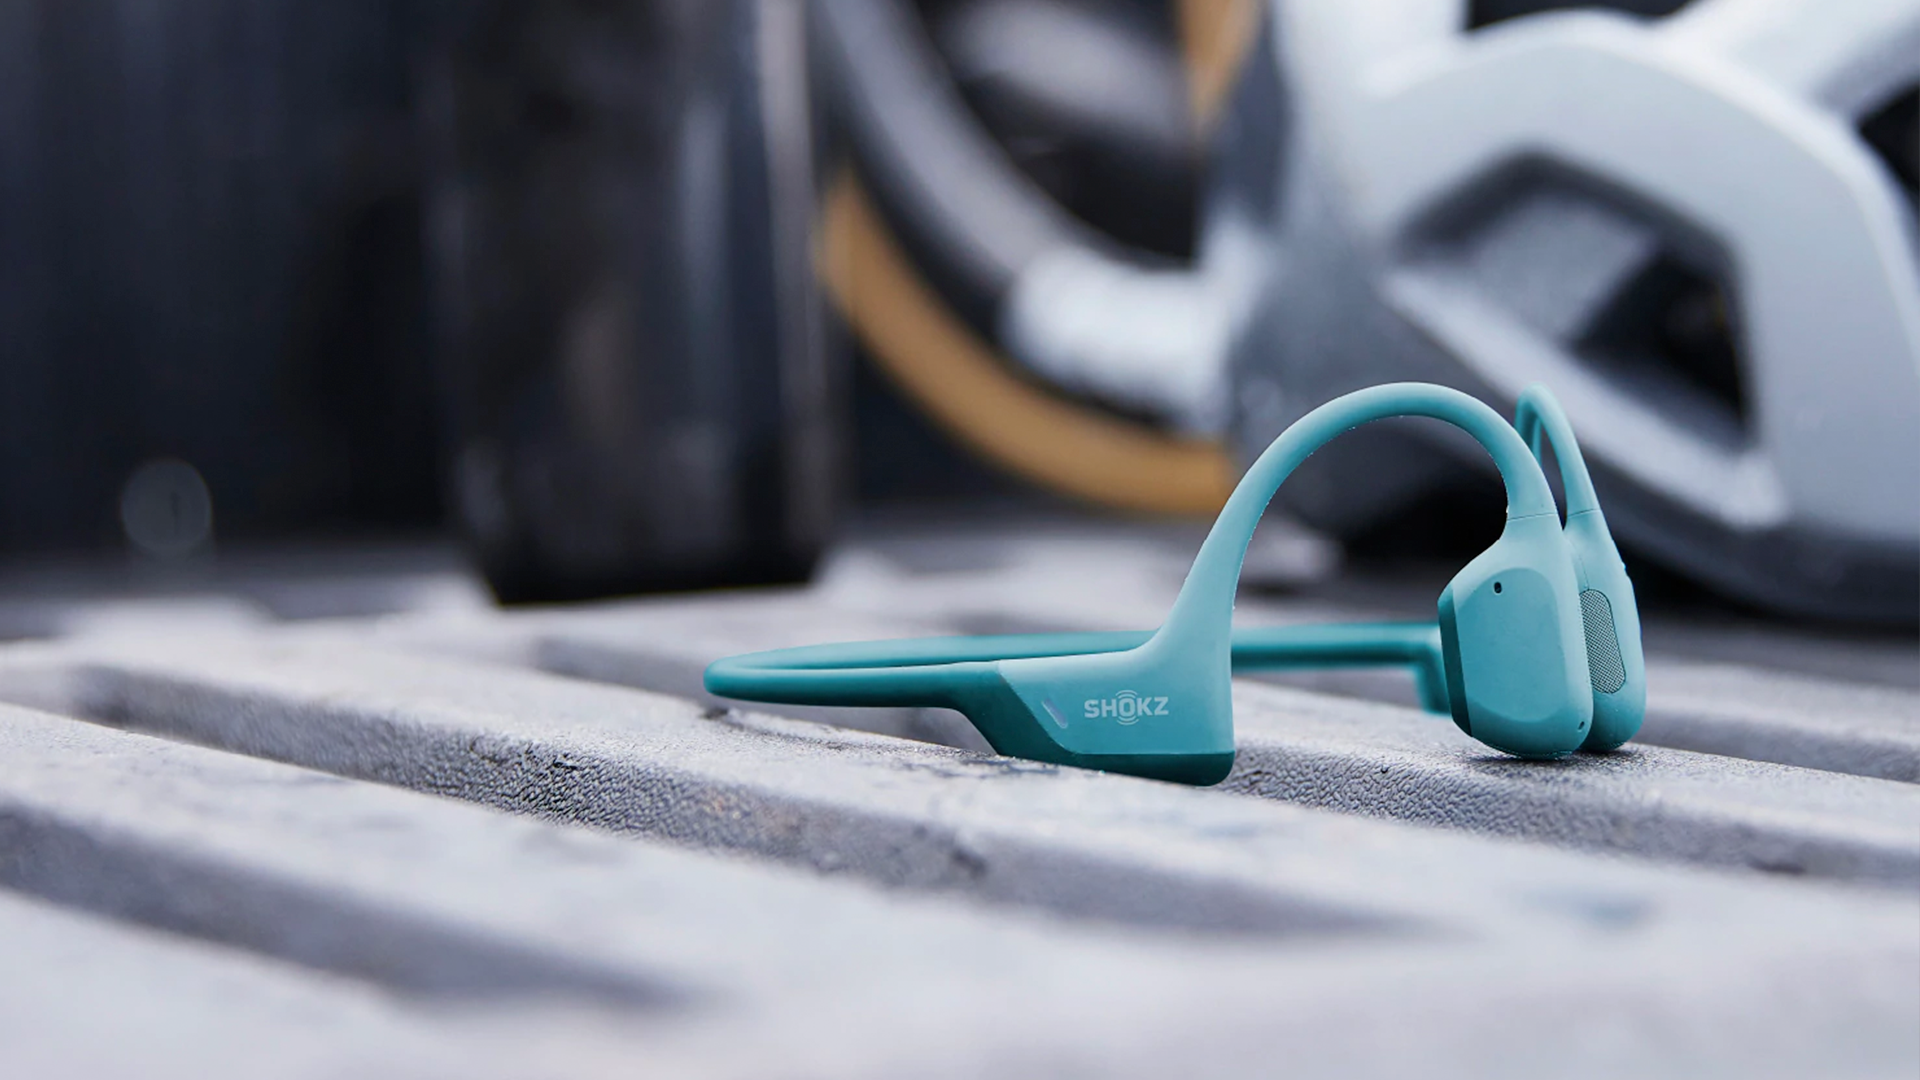 The Shokz Openrun Blue Pro bone conduction headphones on a table.